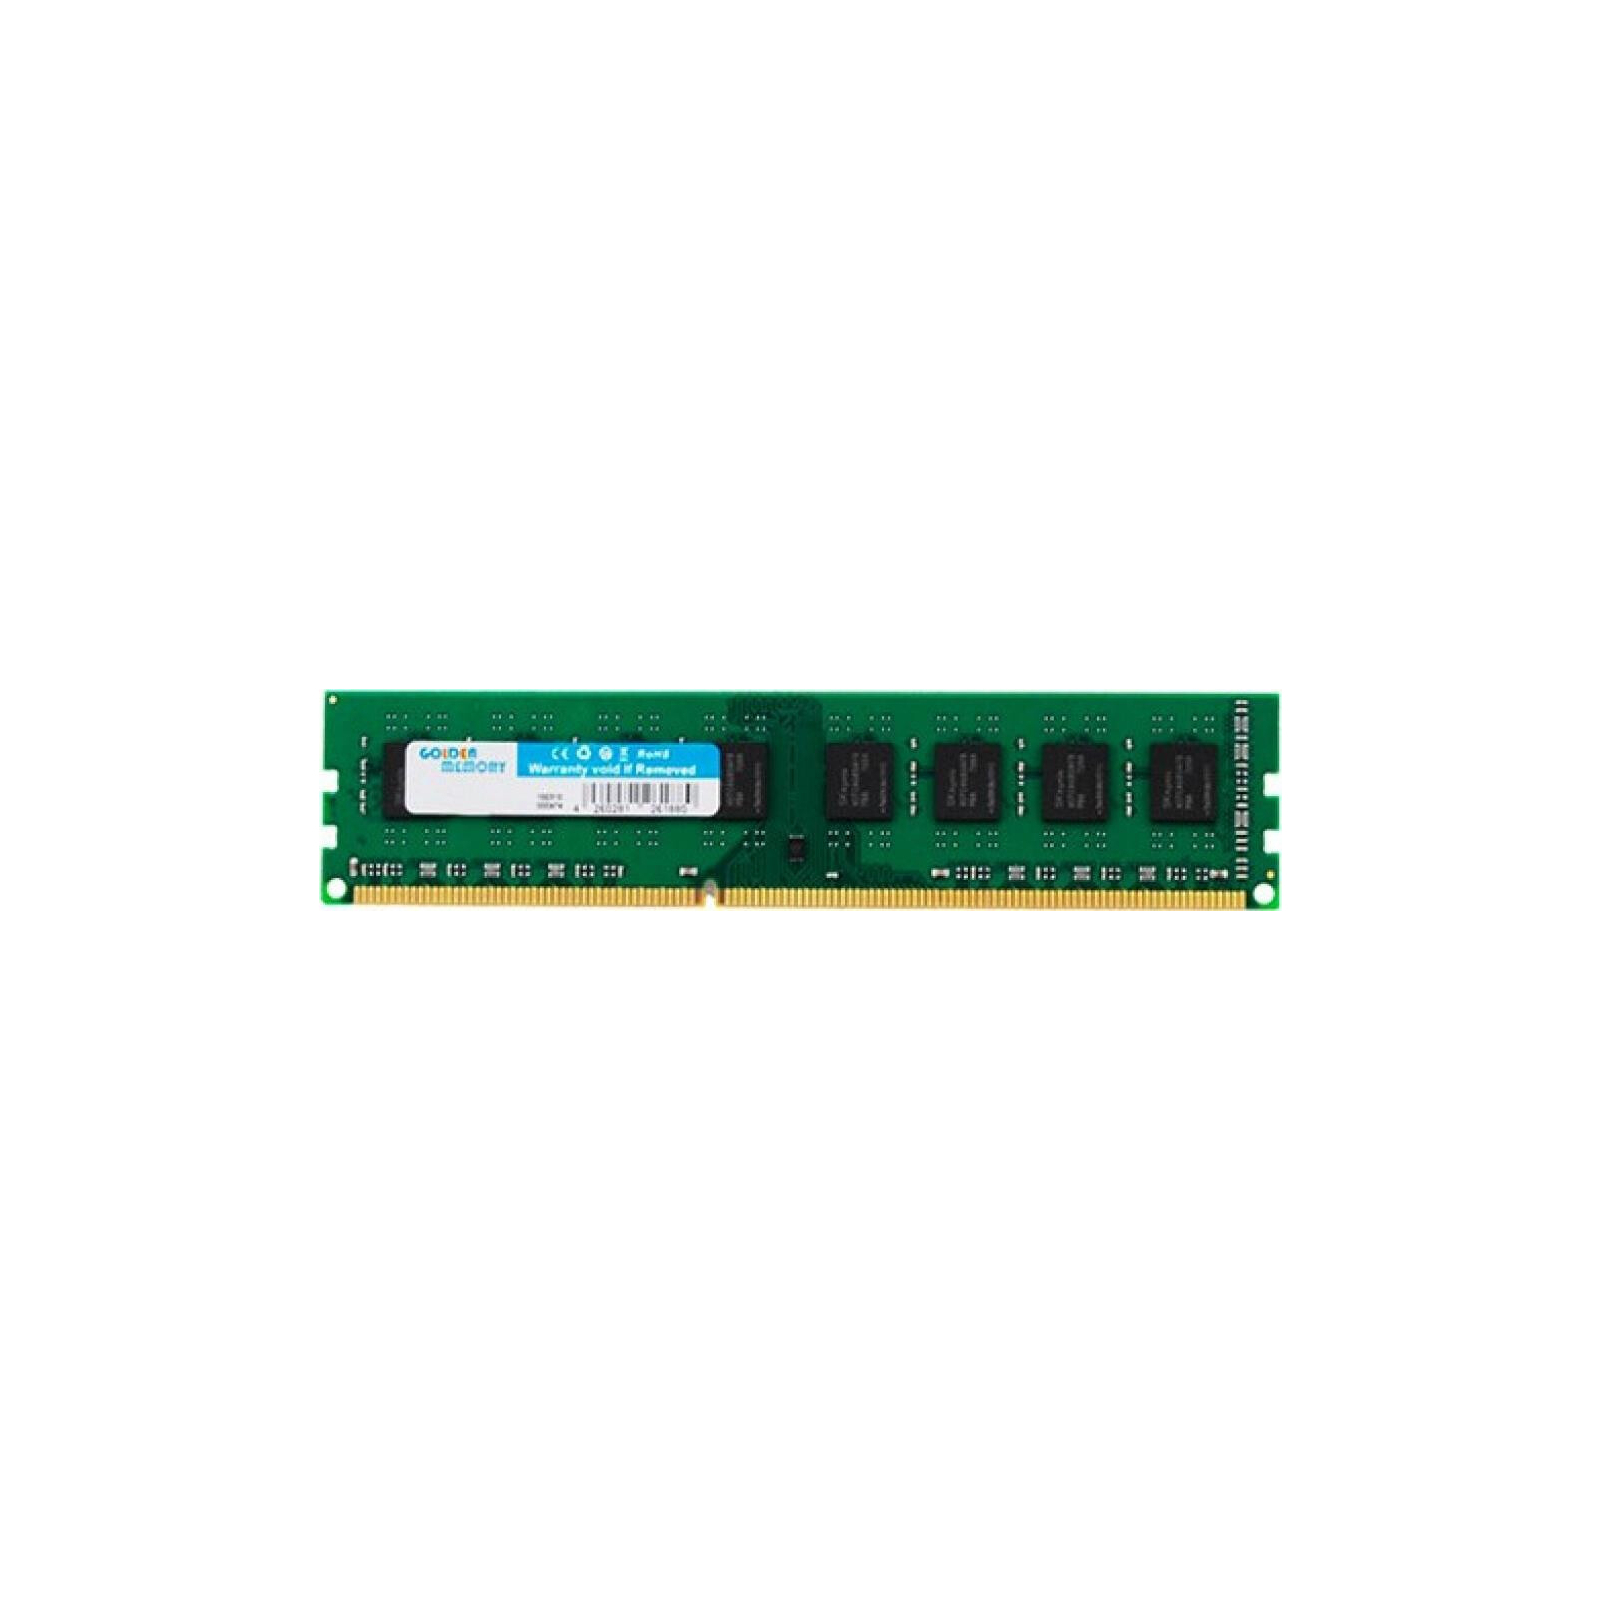 Модуль памяти для компьютера DDR3L 4GB 1600 MHz Golden Memory (GM16LN11/4)